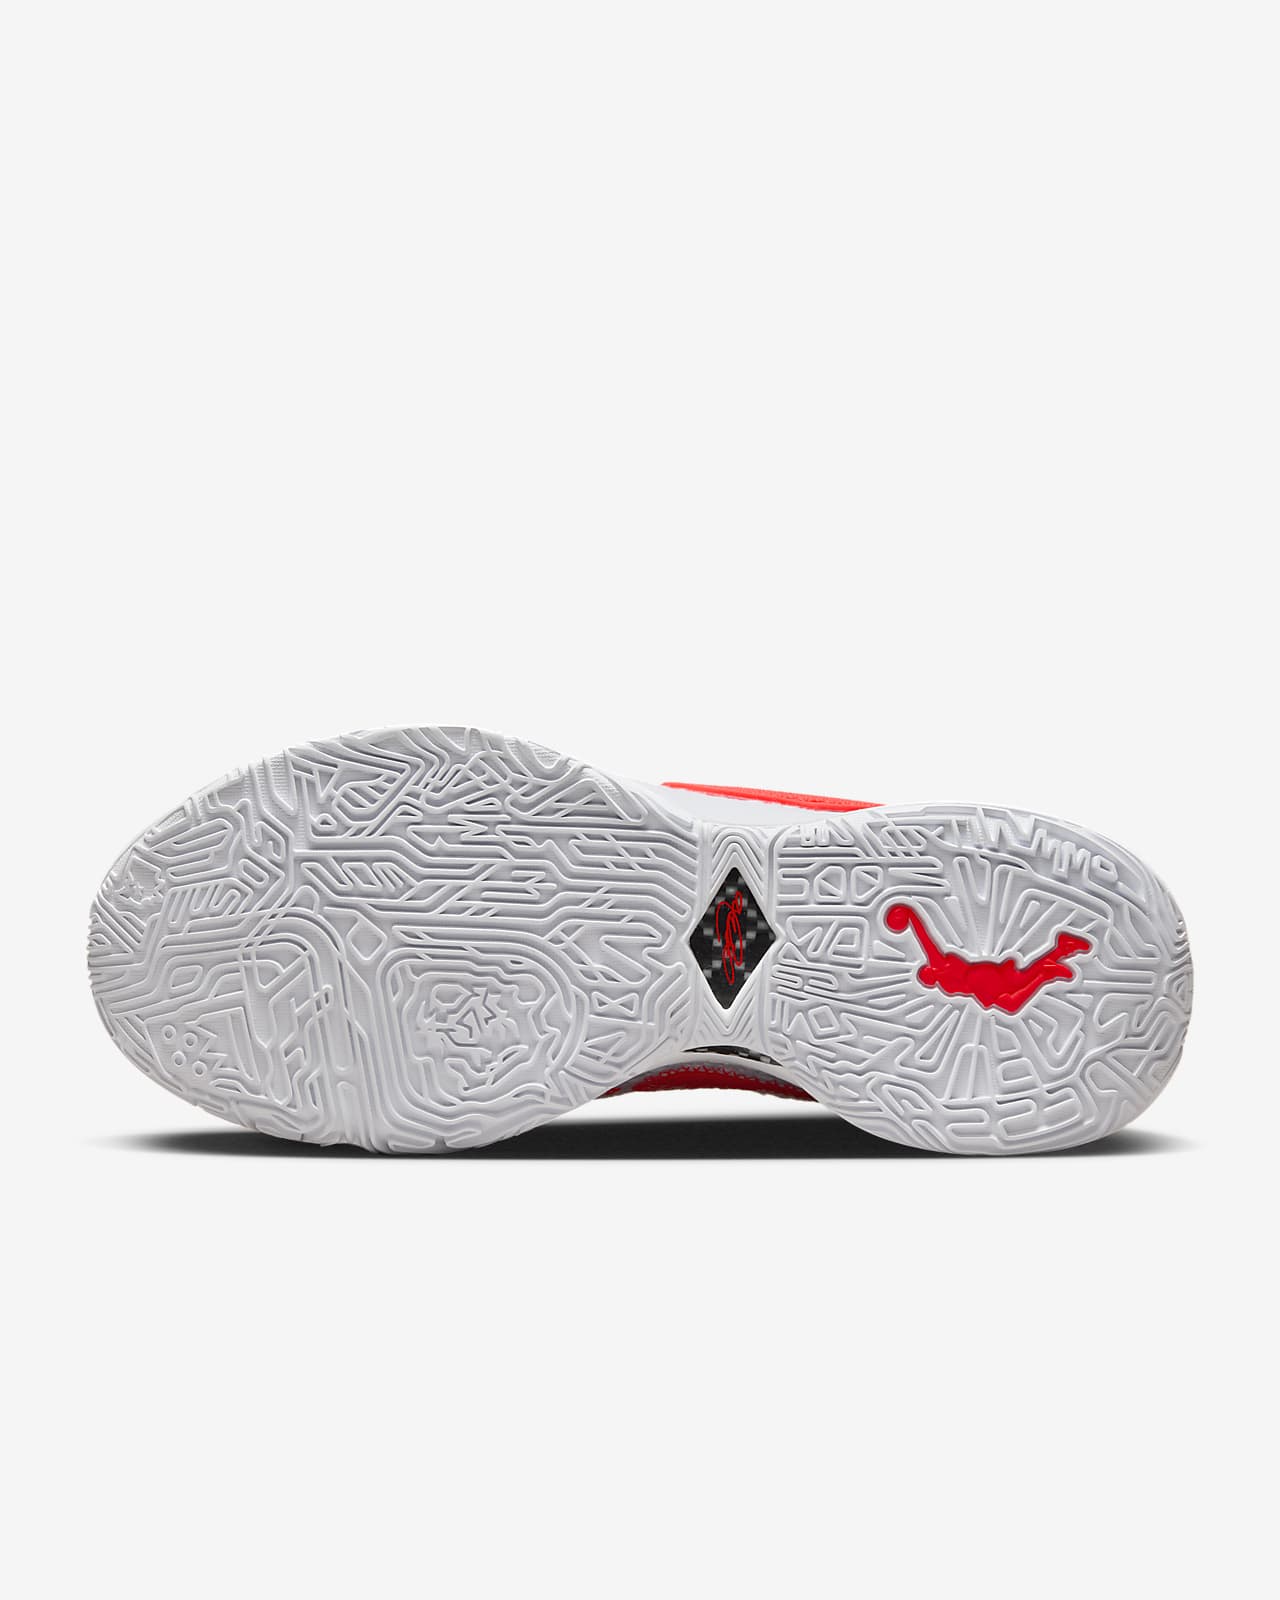 LeBron XX Premium EP 籃球鞋。Nike TW